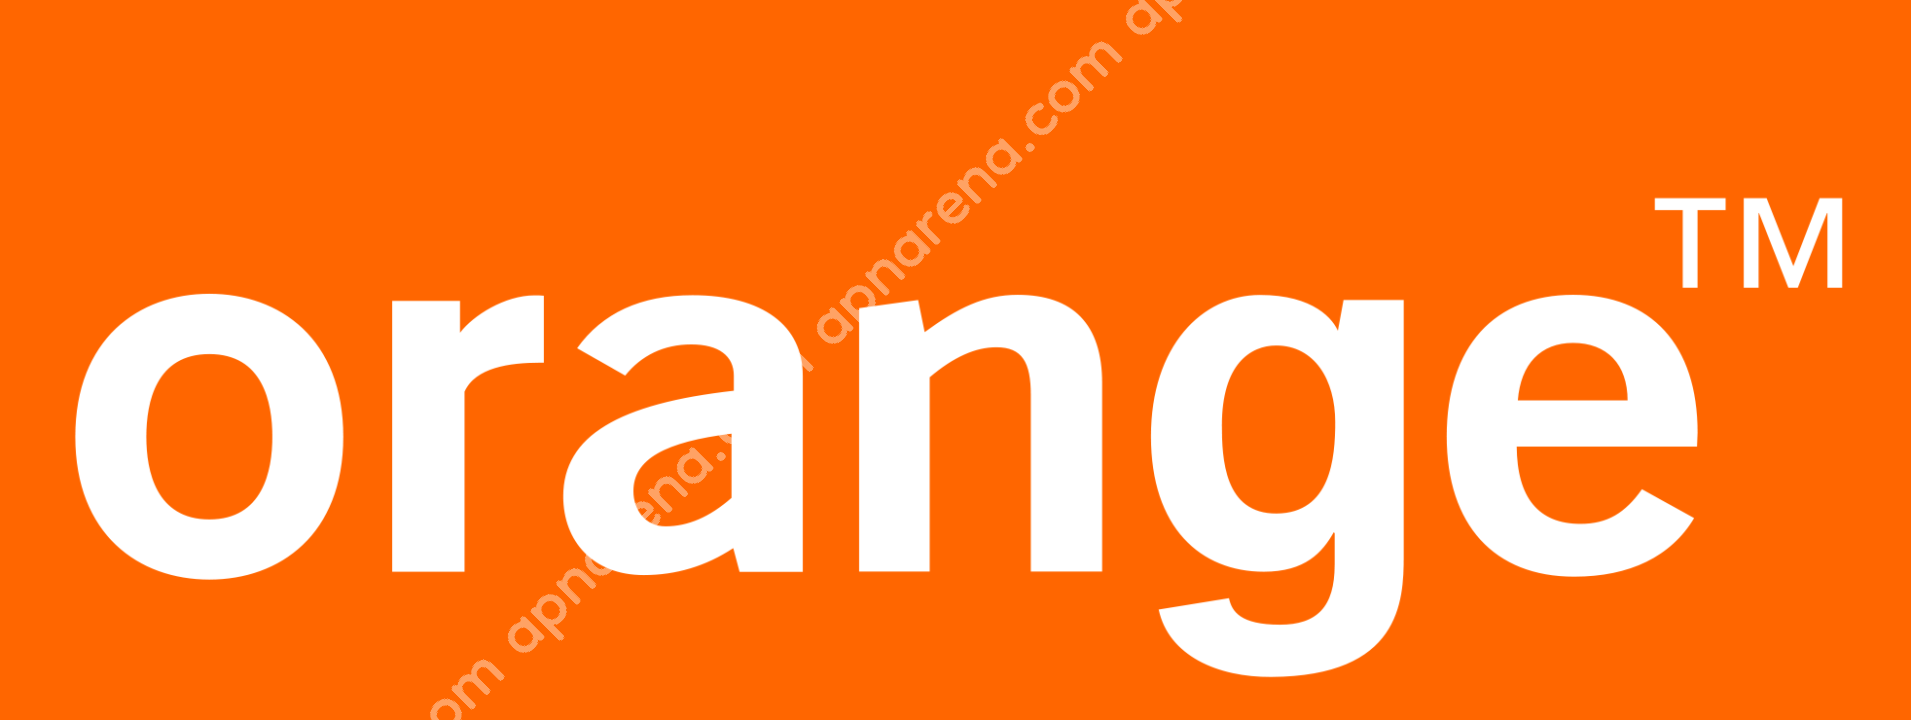 Orange Equatorial Guinea APN Internet Settings Android iPhone